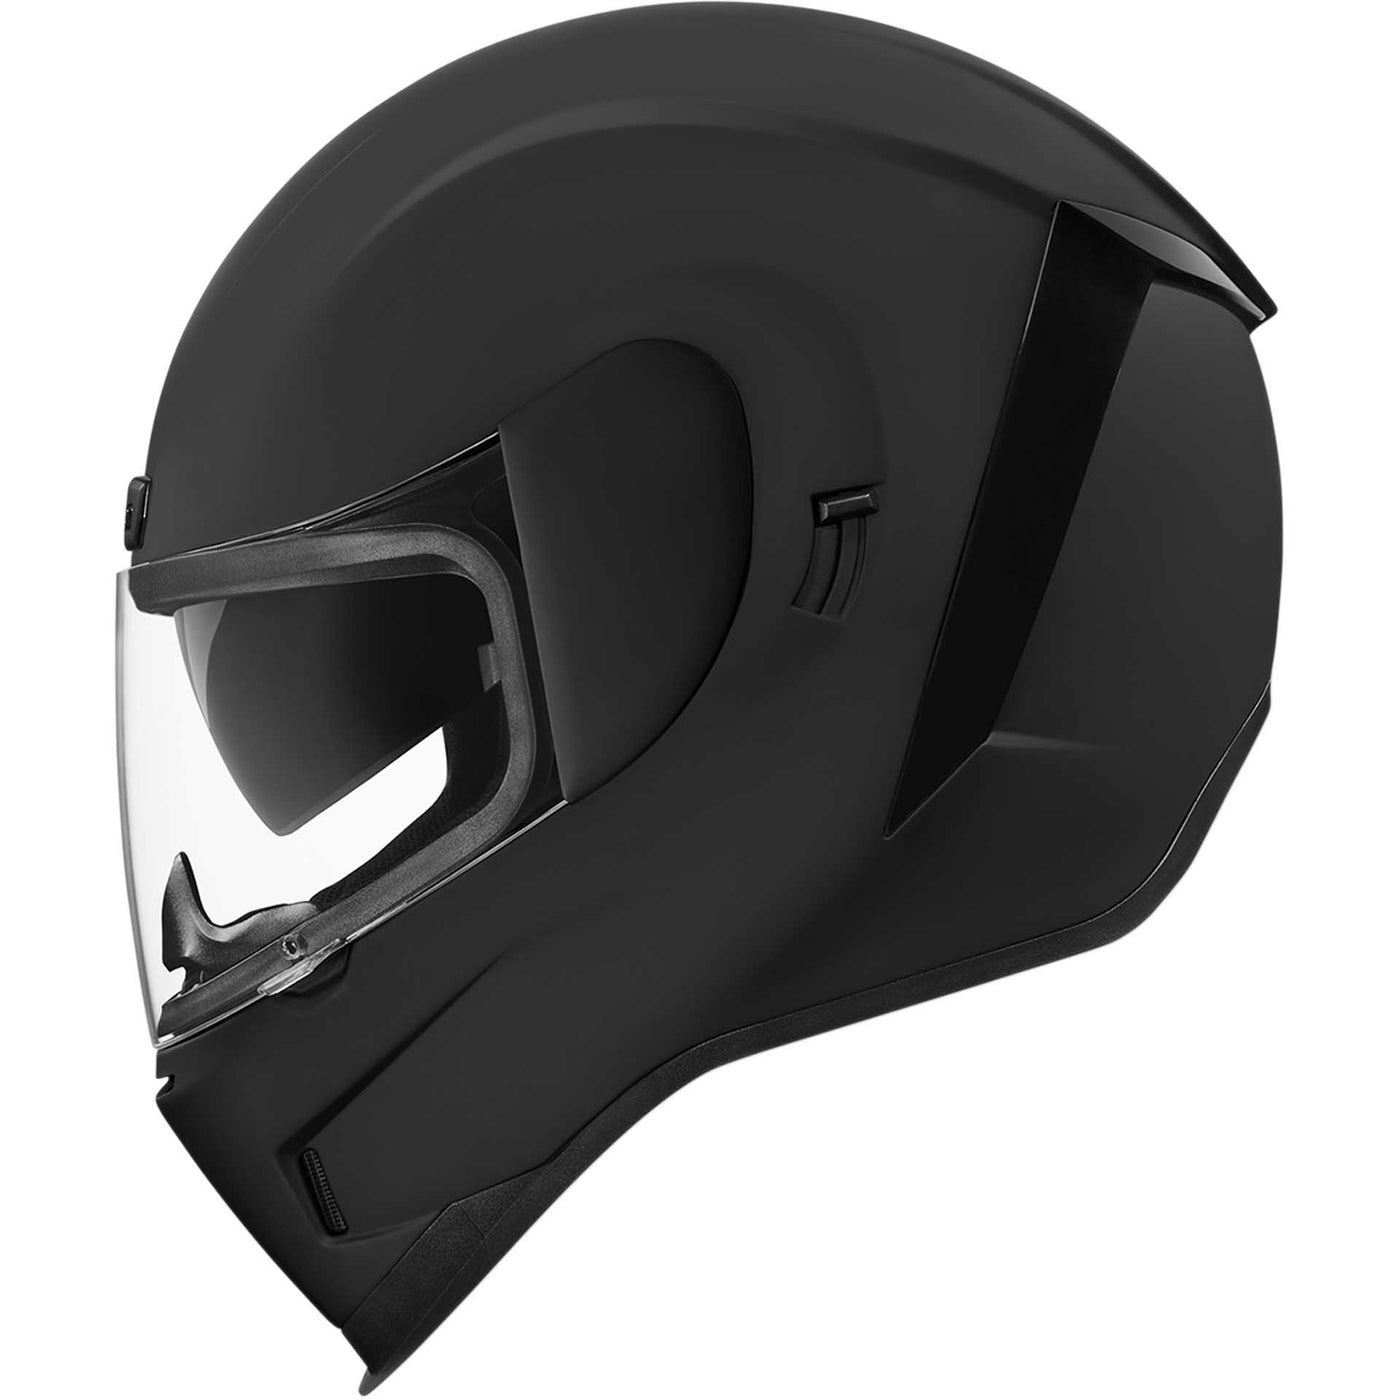 ICON Airform Rubatone Full Face Motorcycle Helmet